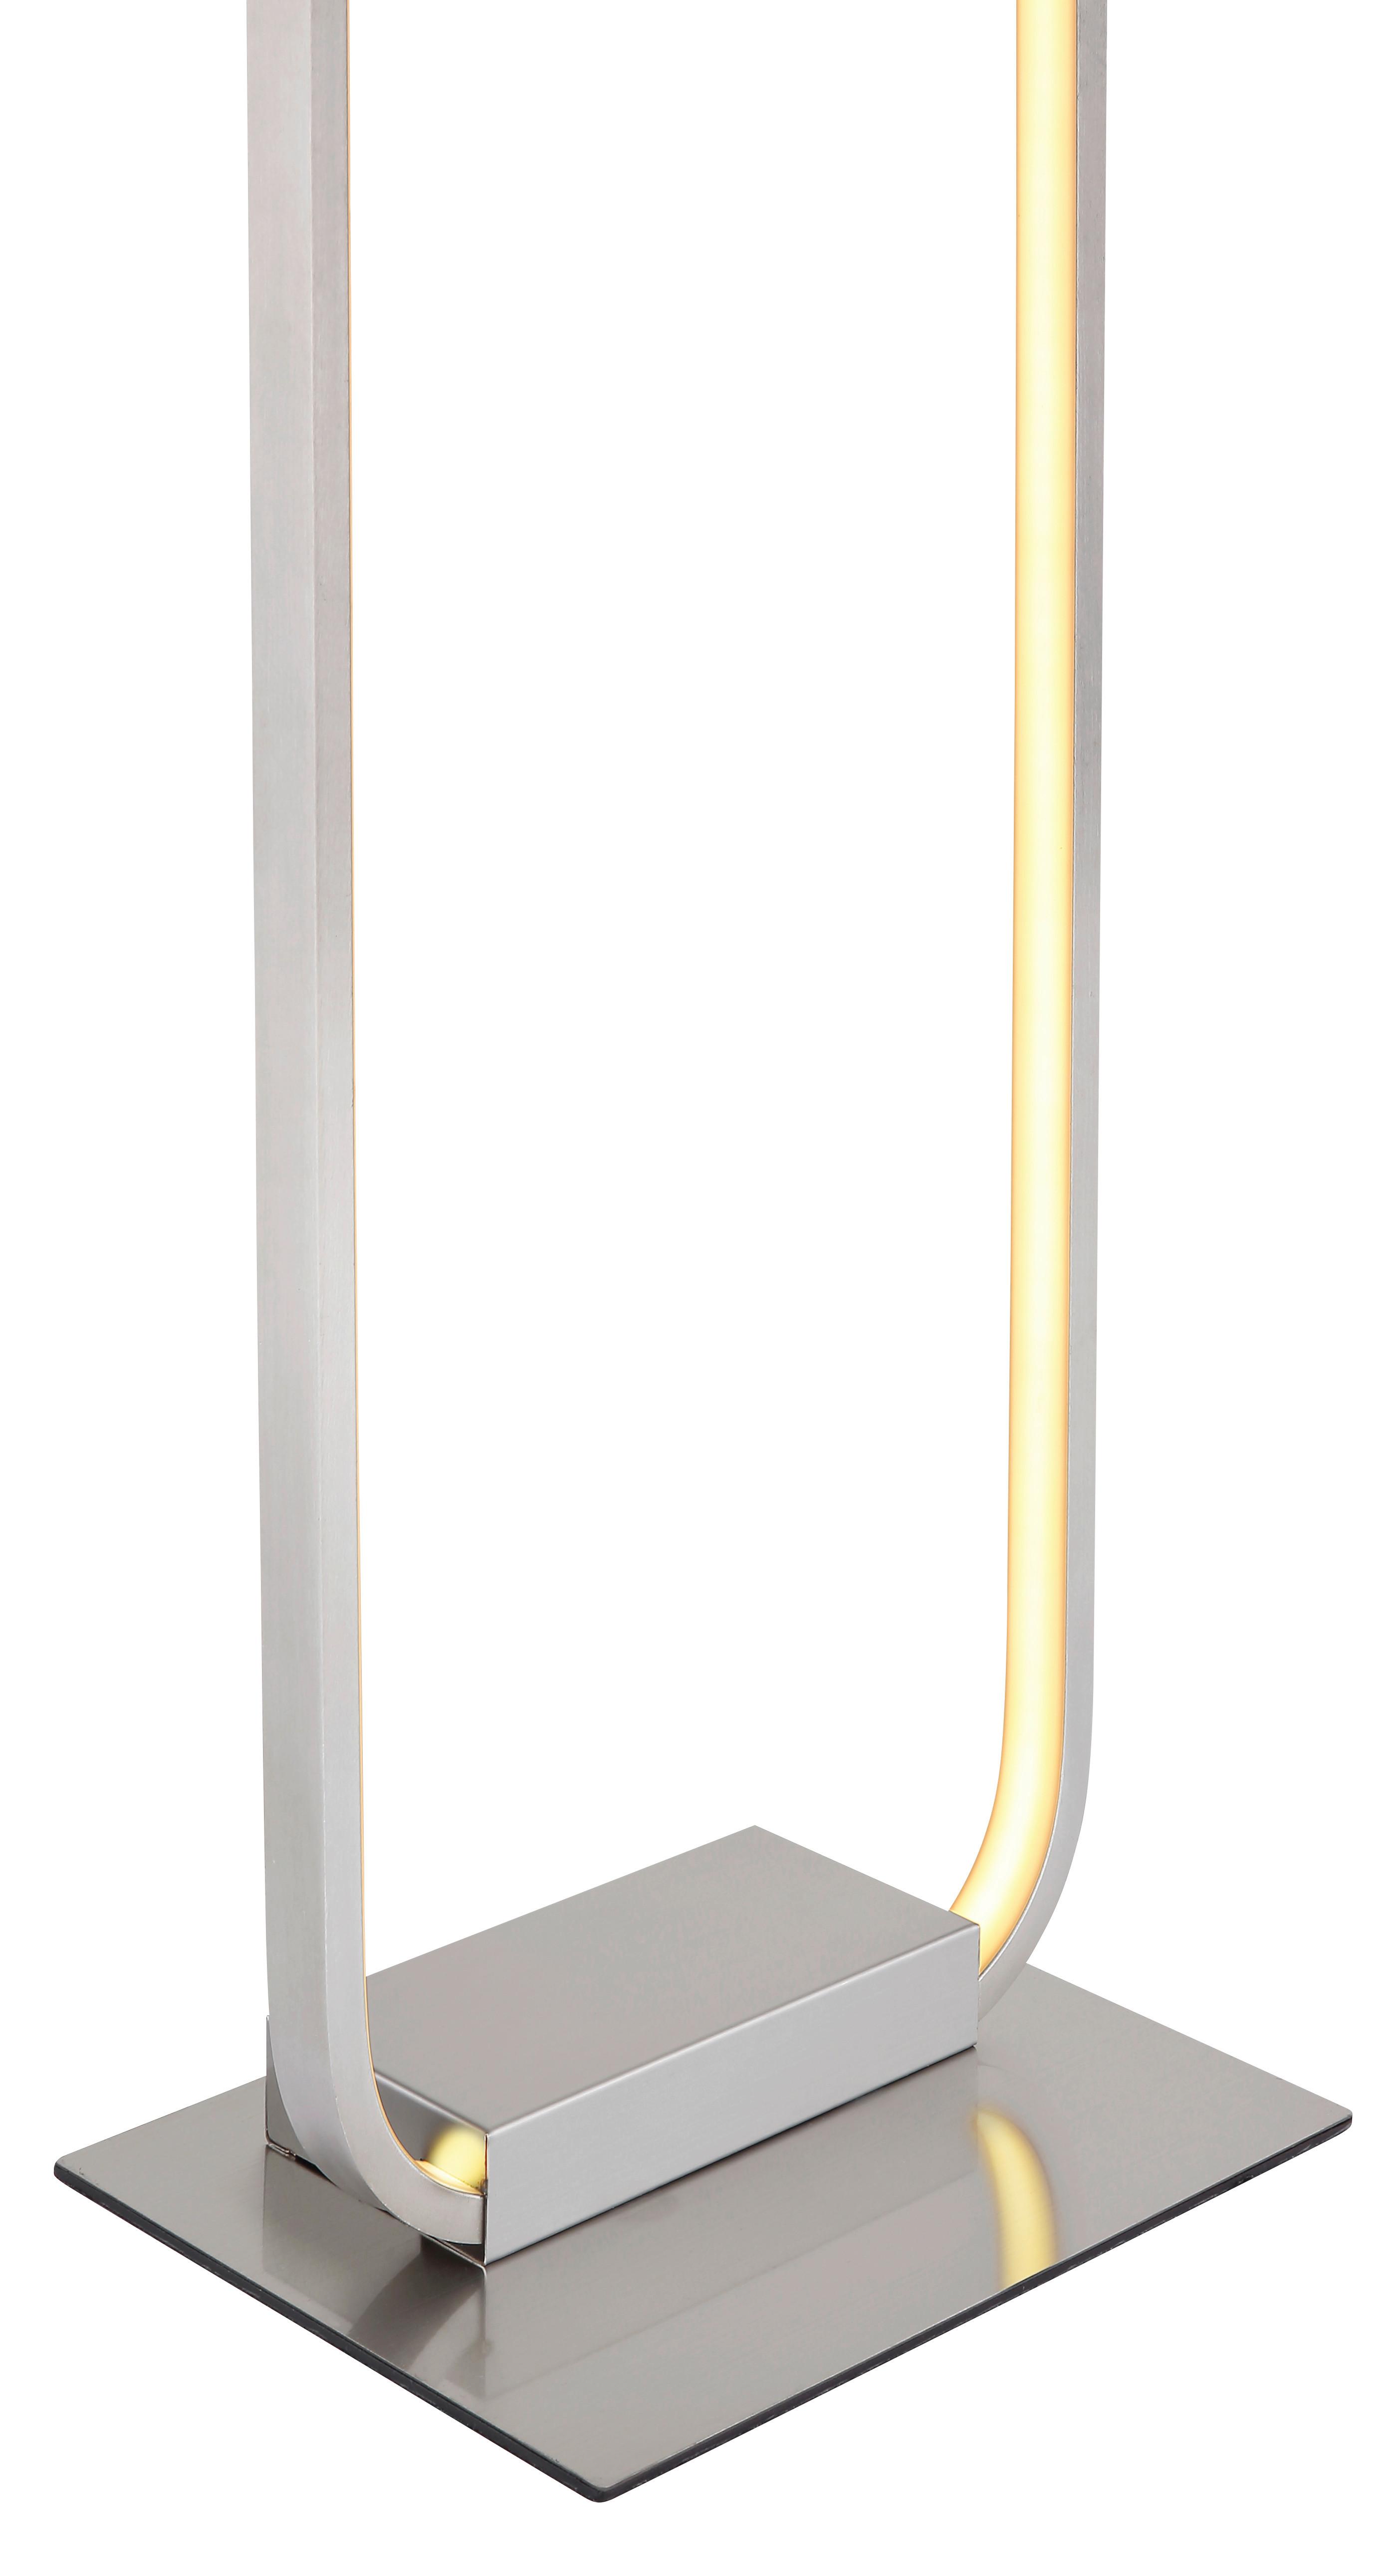 LED-Stehlampe Silla Opalfarben mit Fußschalter - Opal/Nickelfarben, Basics, Kunststoff/Metall (23/18/130cm) - Globo